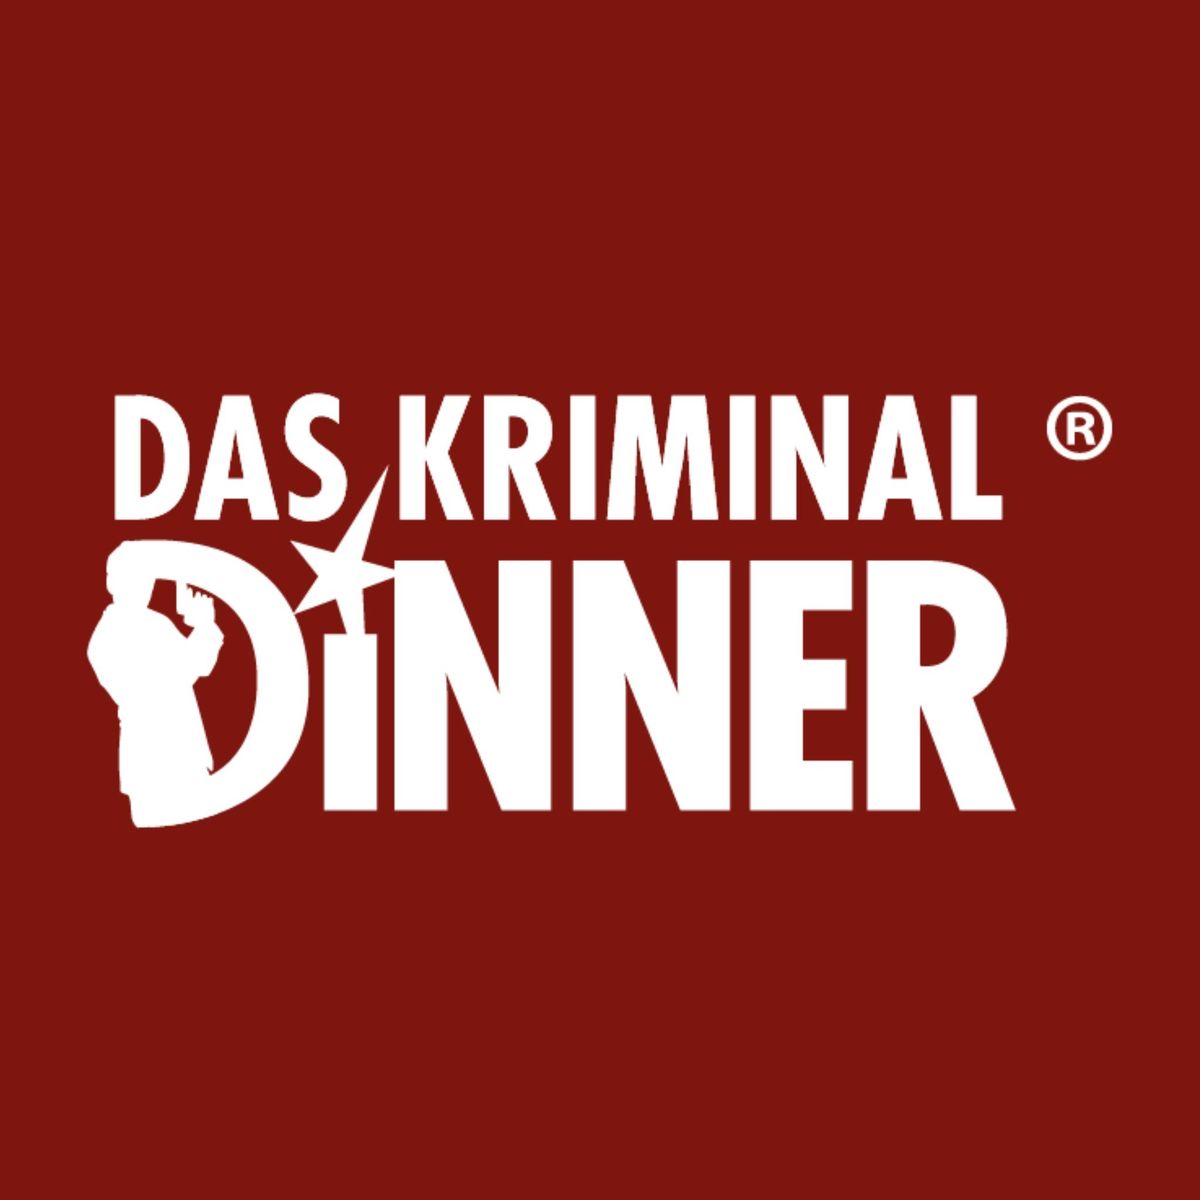 Das Kriminal Dinner in Esslingen 